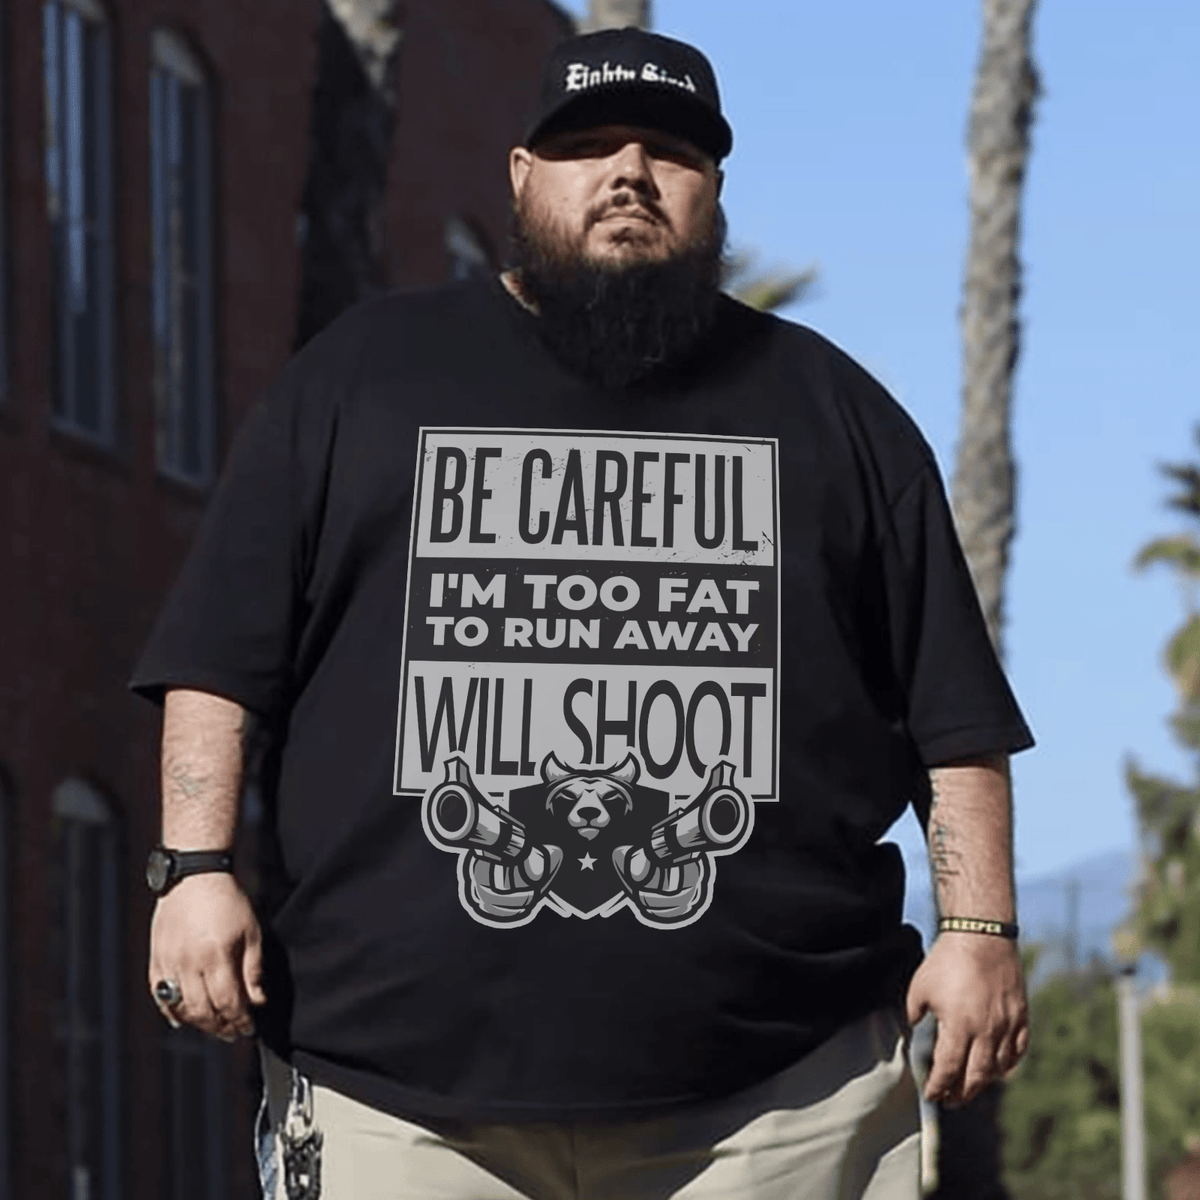 Fat Will Shoot Men T-Shirt, Oversize Plus Size Man Clothing